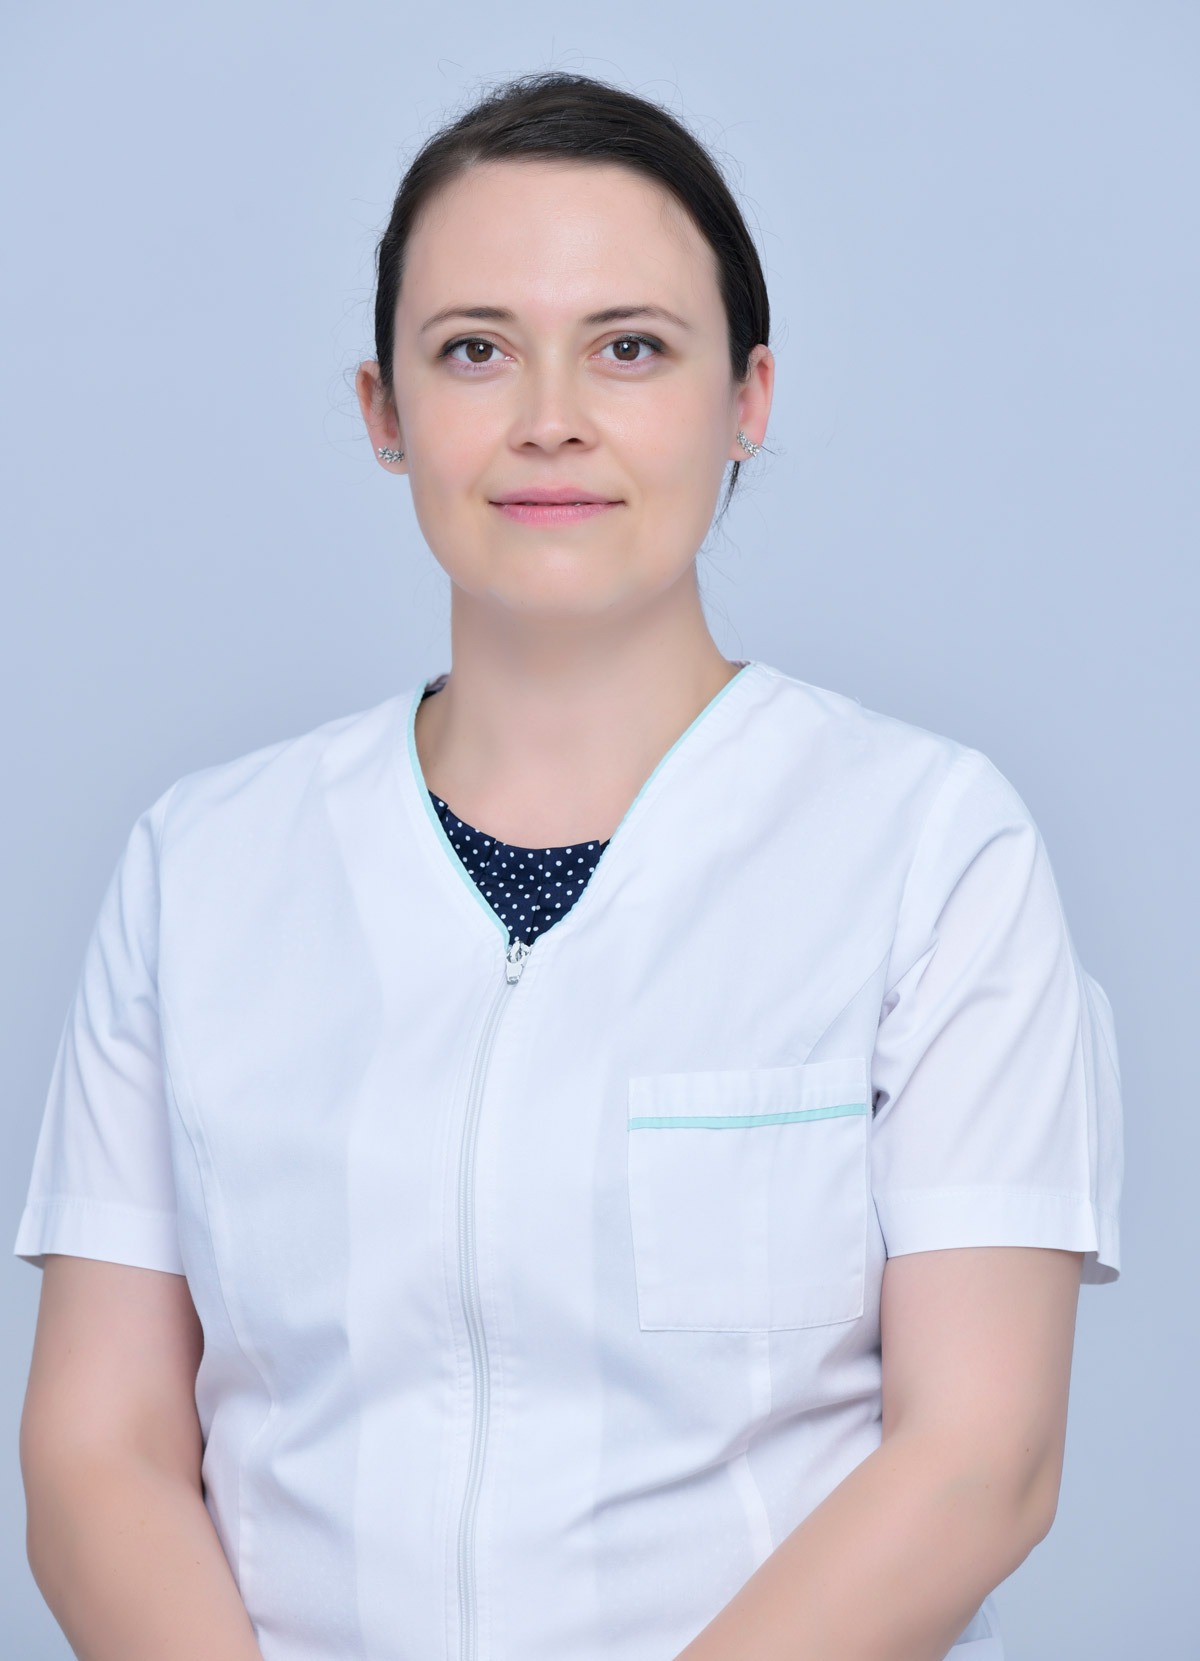 Doctor Mihaela Sarbu